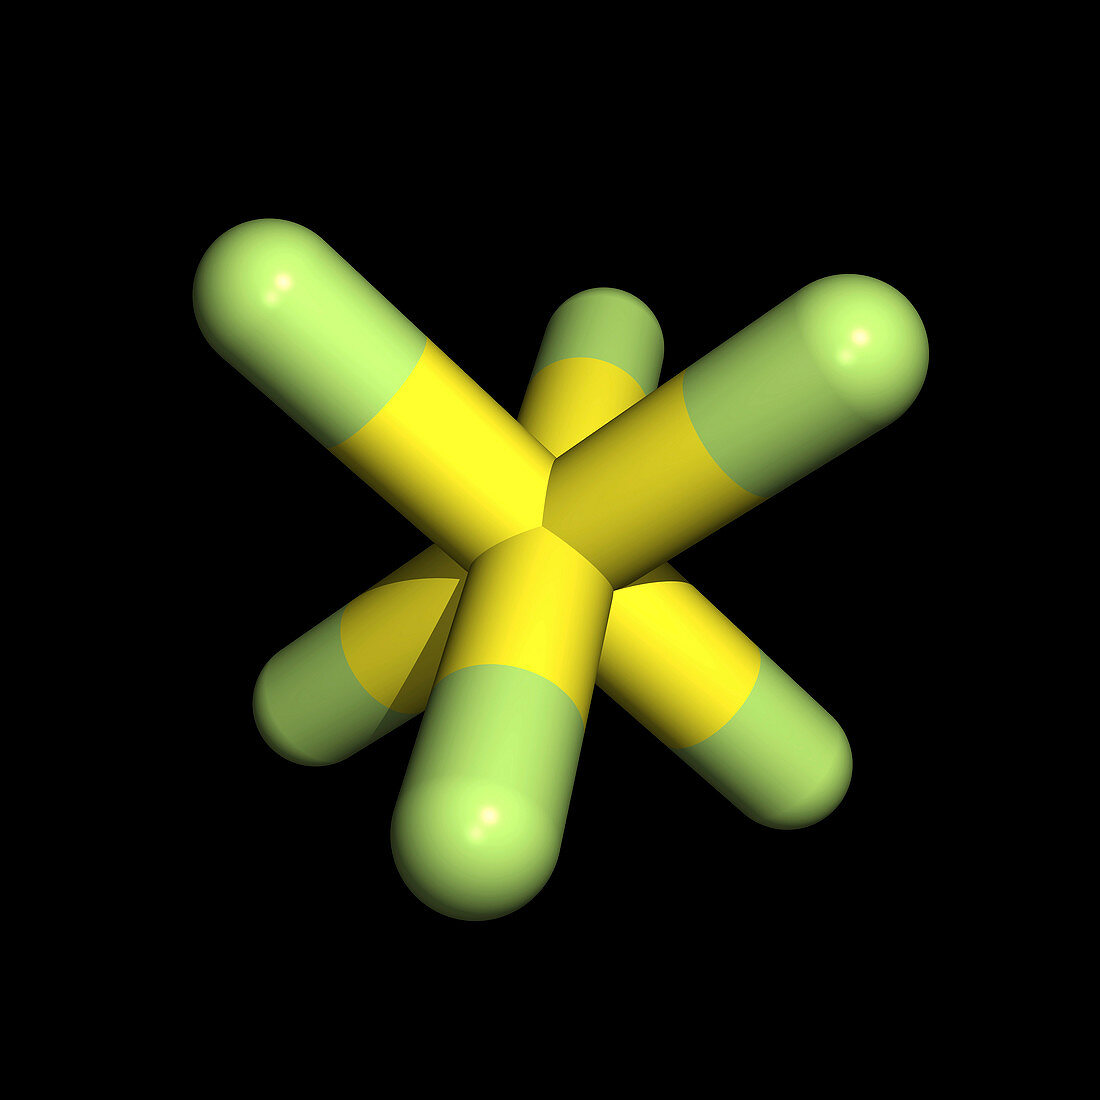 Sulphur hexafluoride molecule